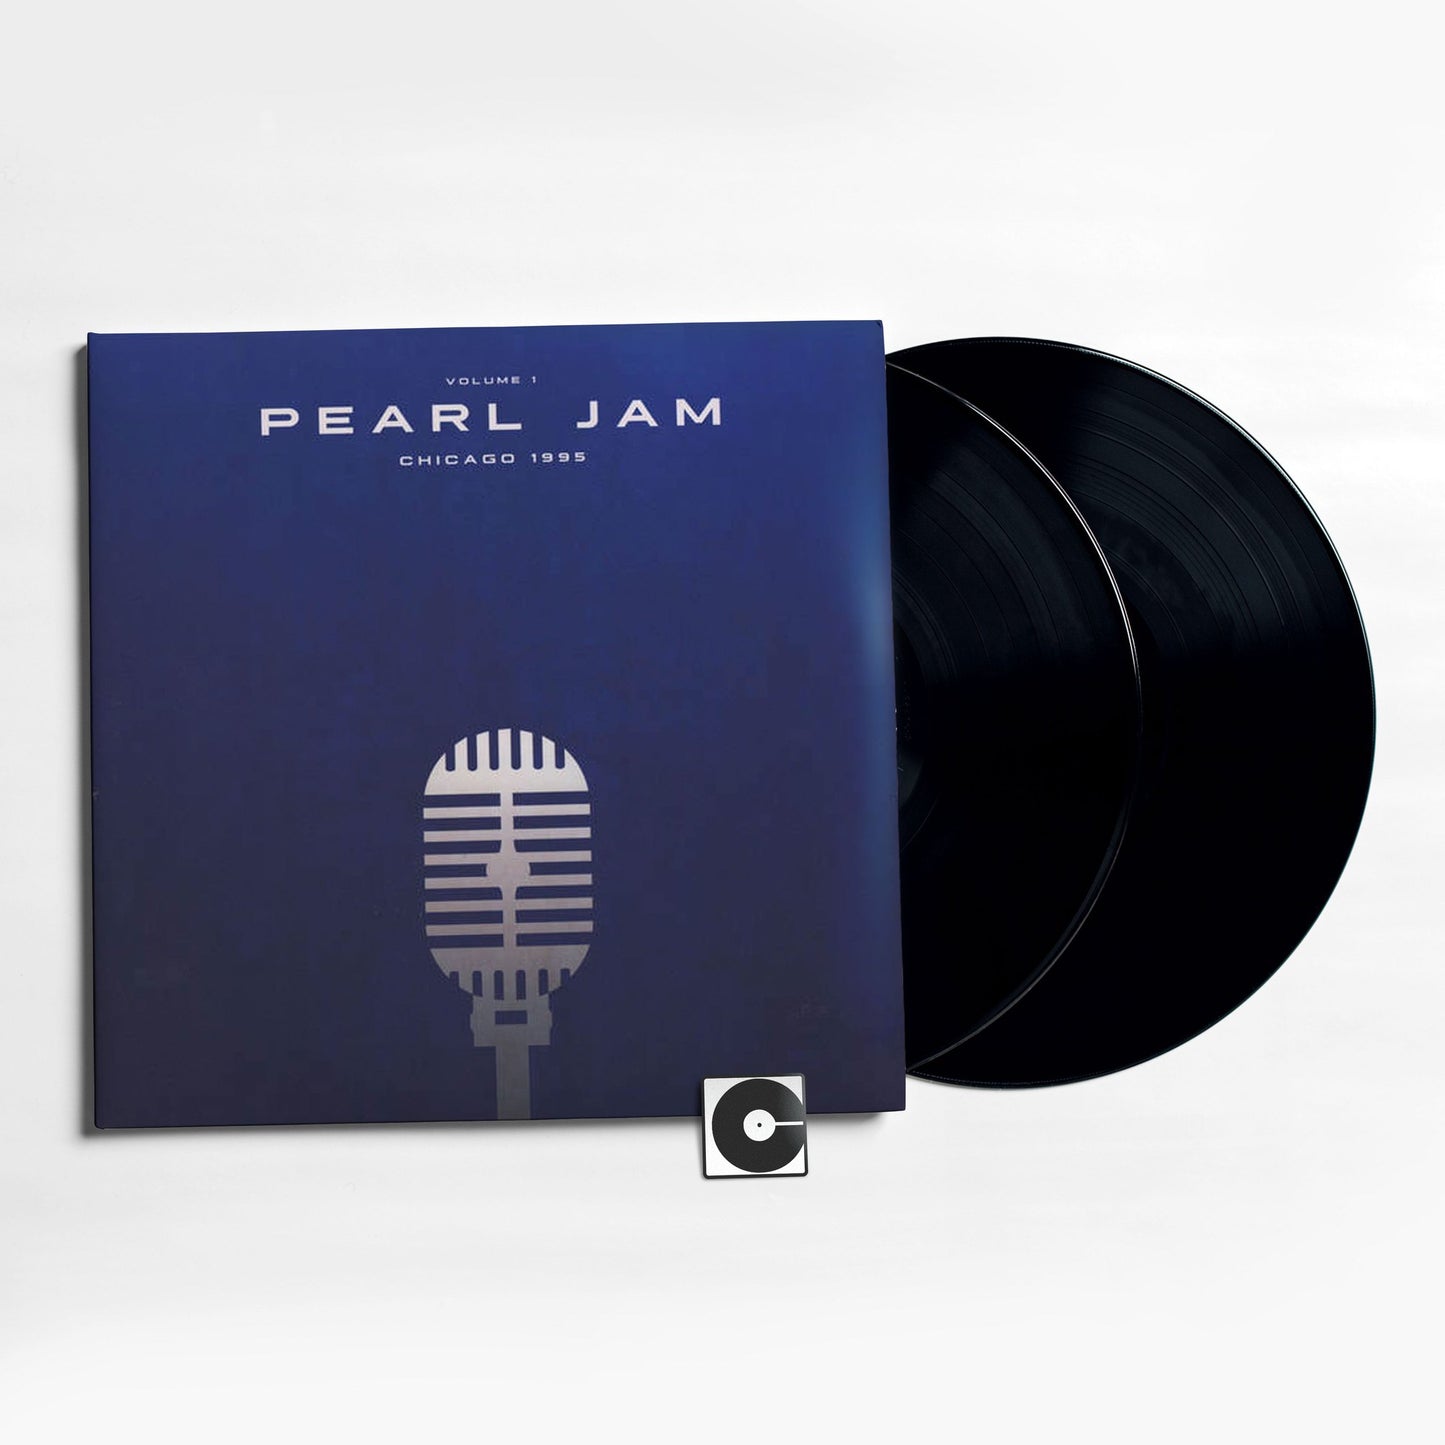 Pearl Jam - "Chicago 1995 Volume 1"